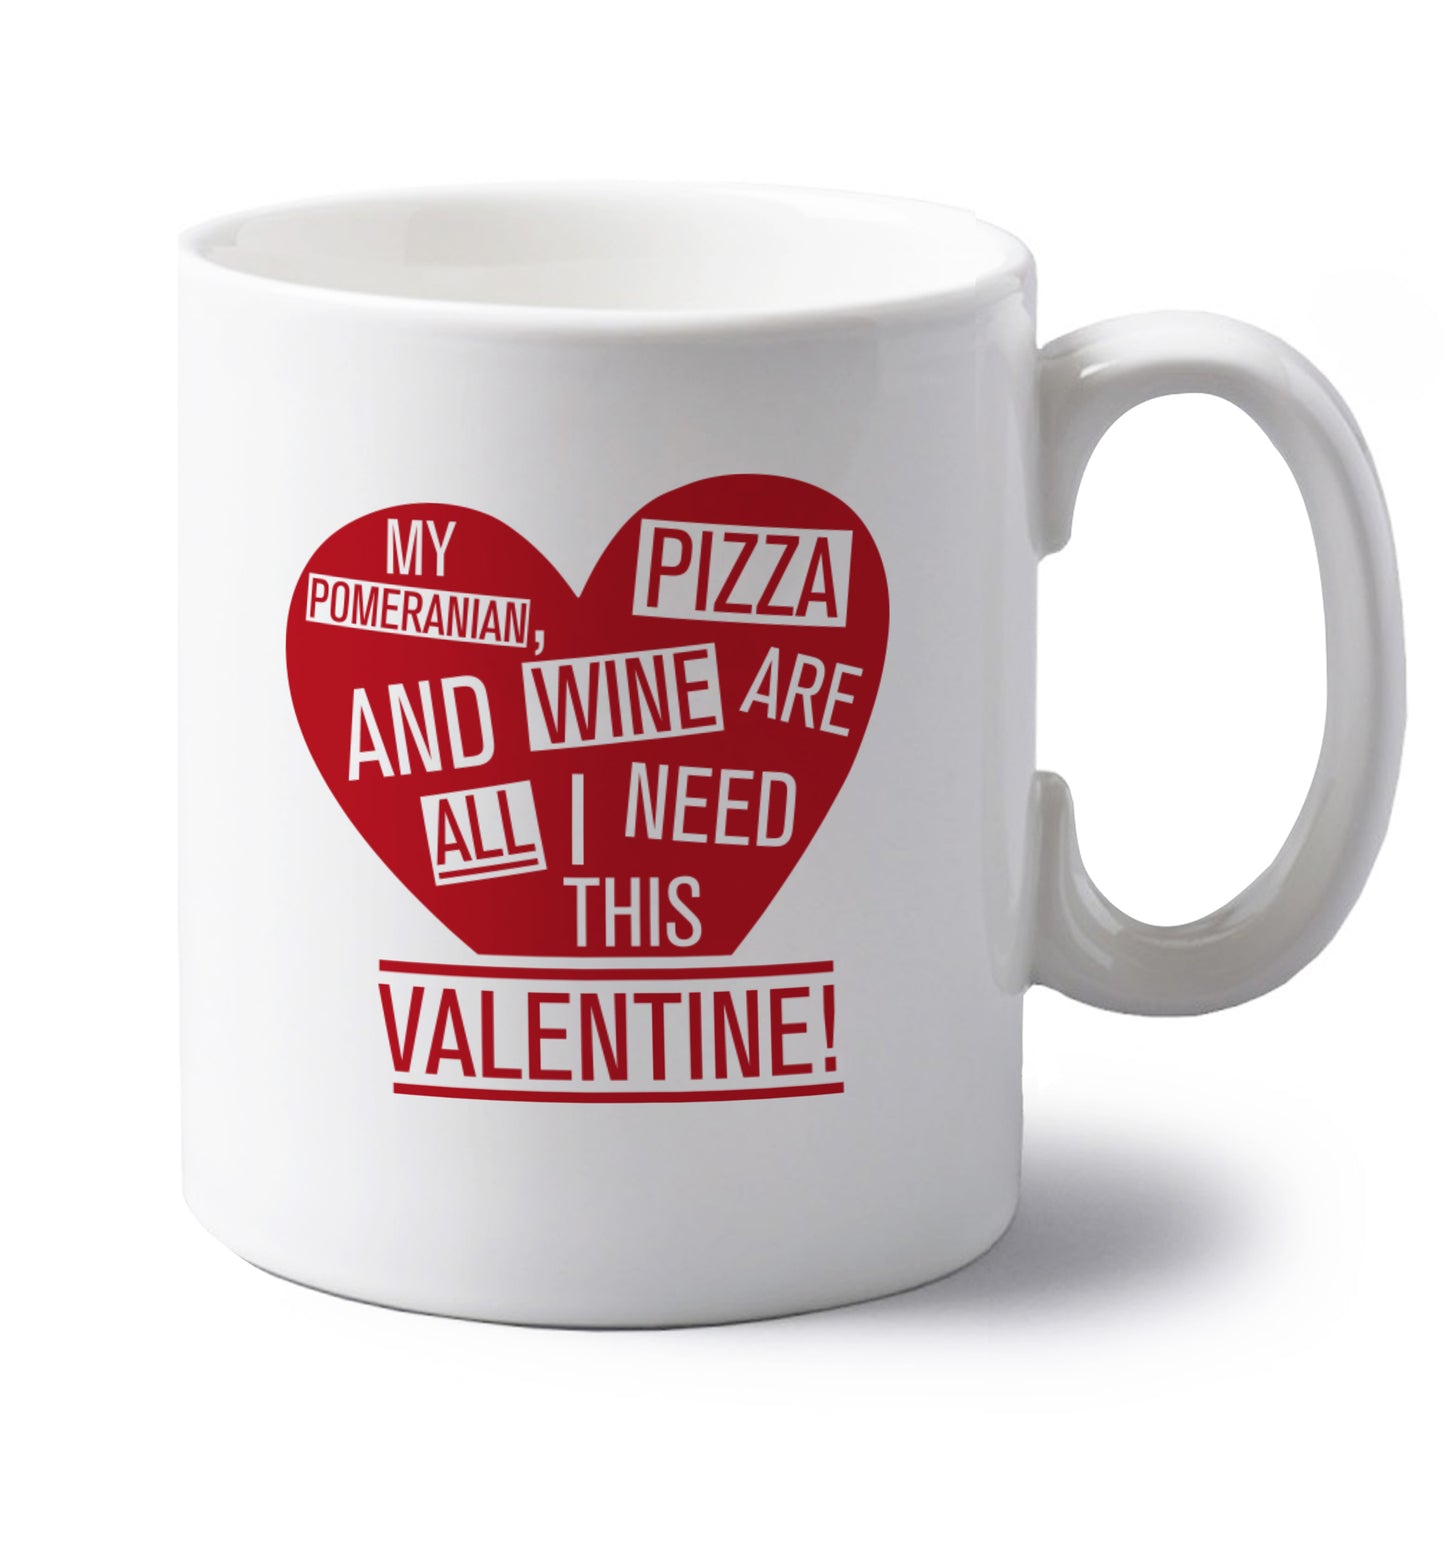 My pomeranian, chocolate and wine are all I need this valentine! left handed white ceramic mug 